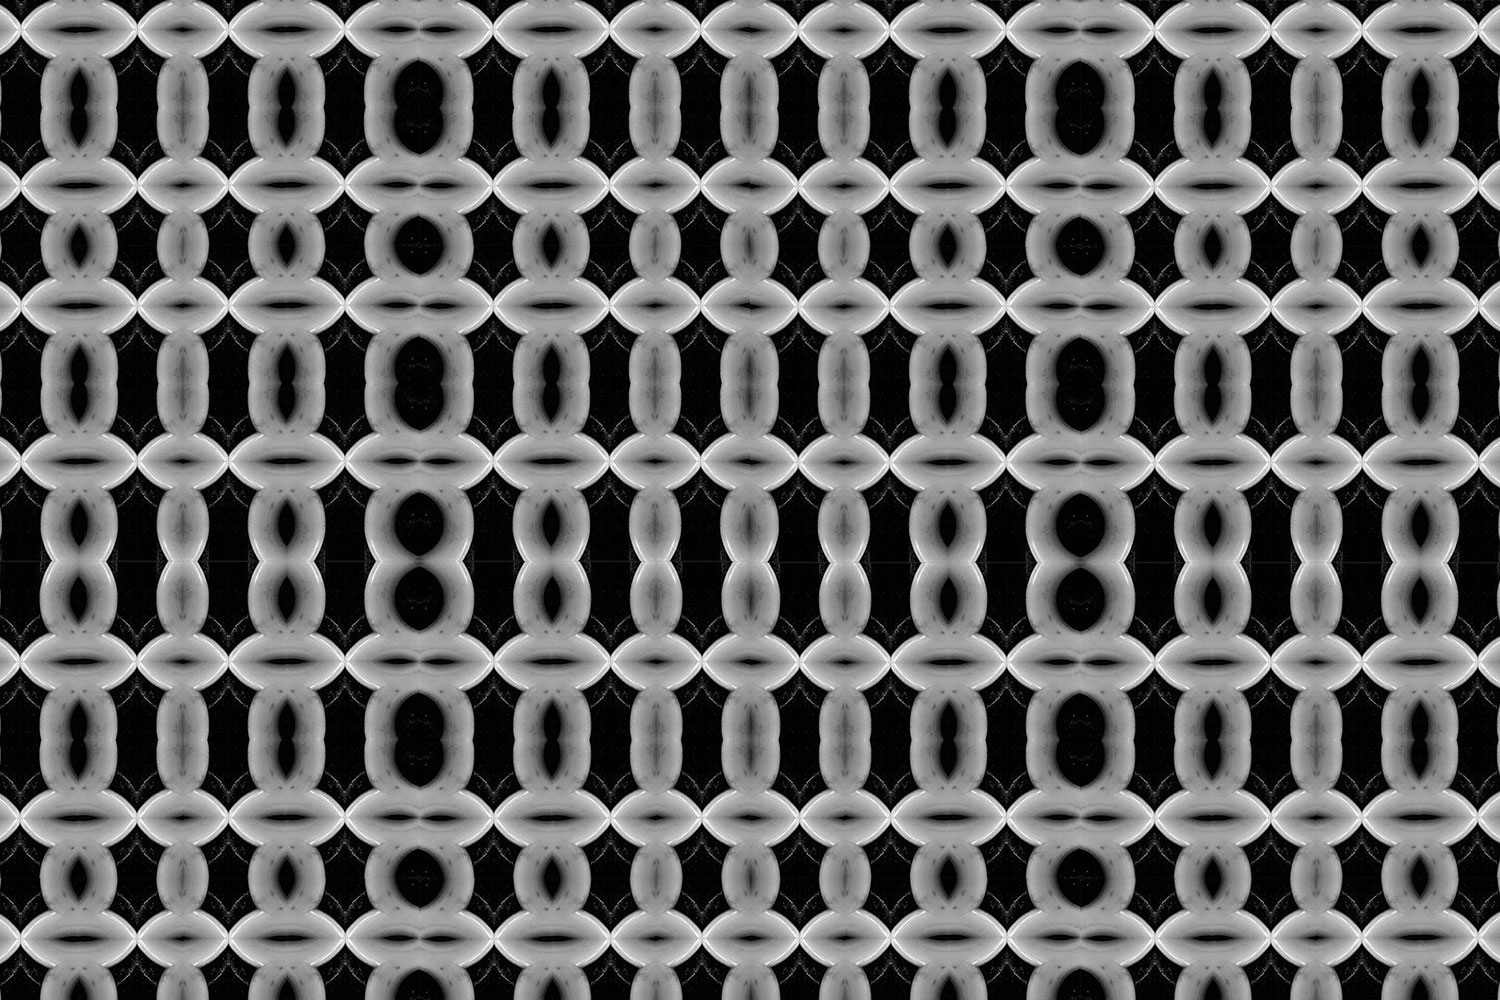 Kaleidoscope art experimentation repeating pattern